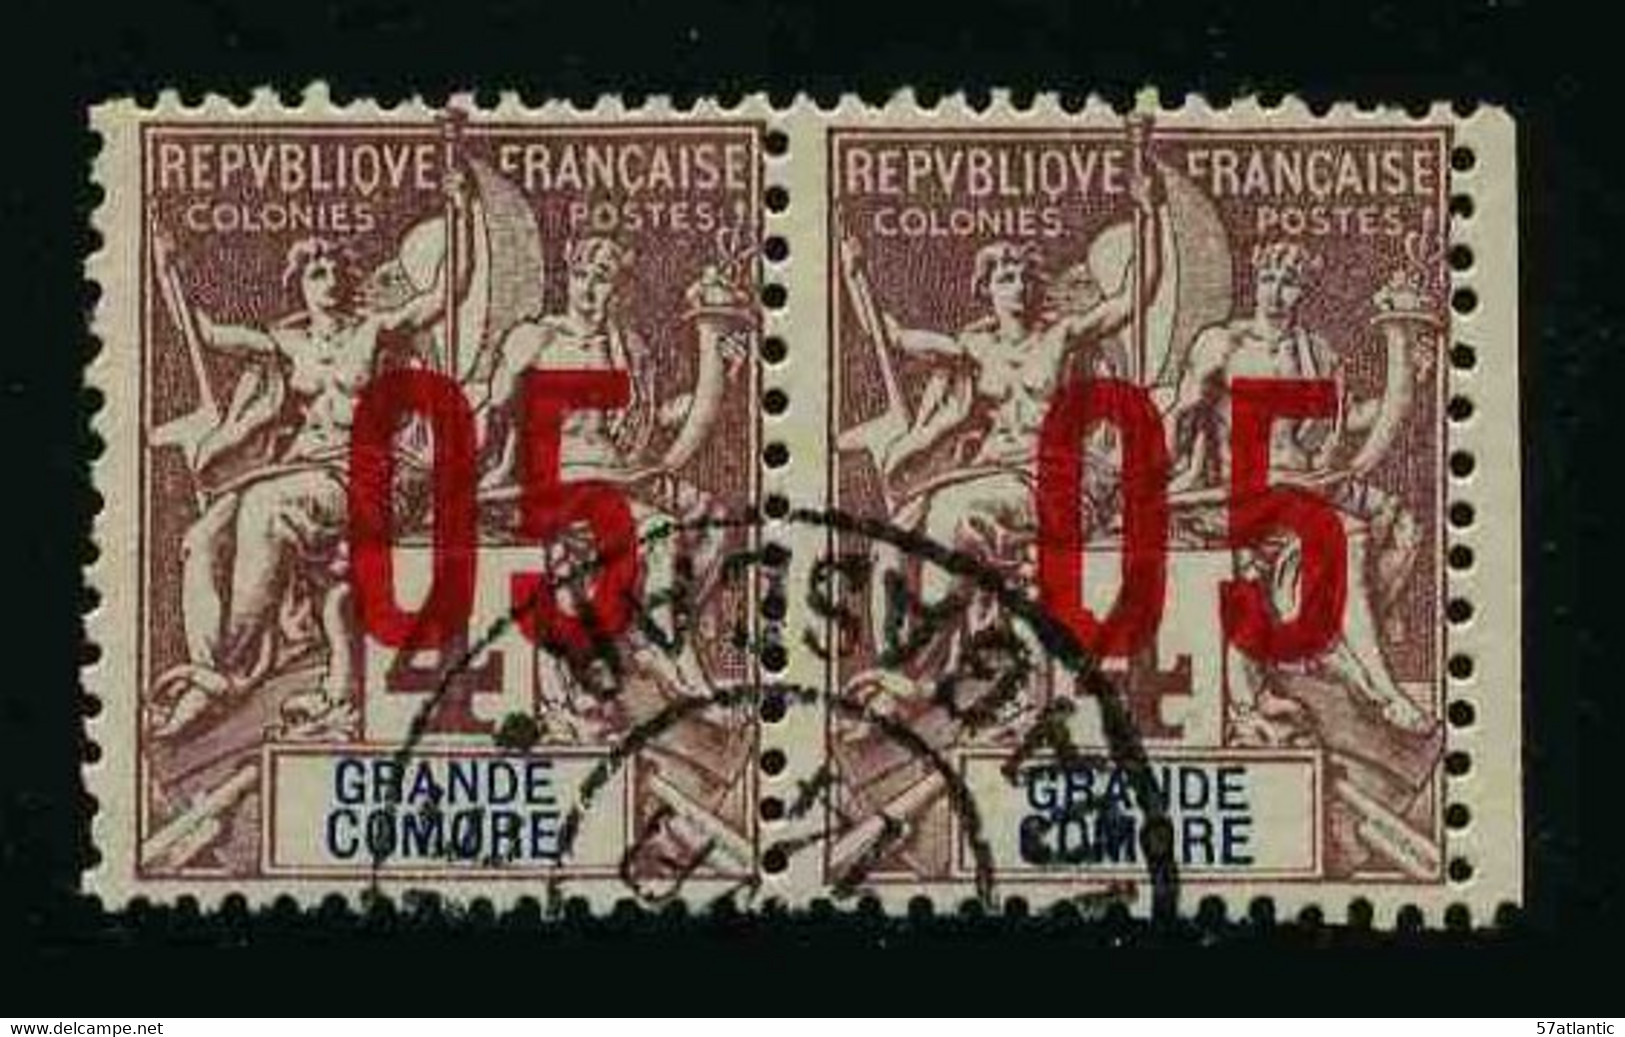 GRANDE COMORE - COLONIE FRANCAISE - YT 21 ET 21A - CHIFFRES ESPACES - TIMBRES OBLITERES - Used Stamps